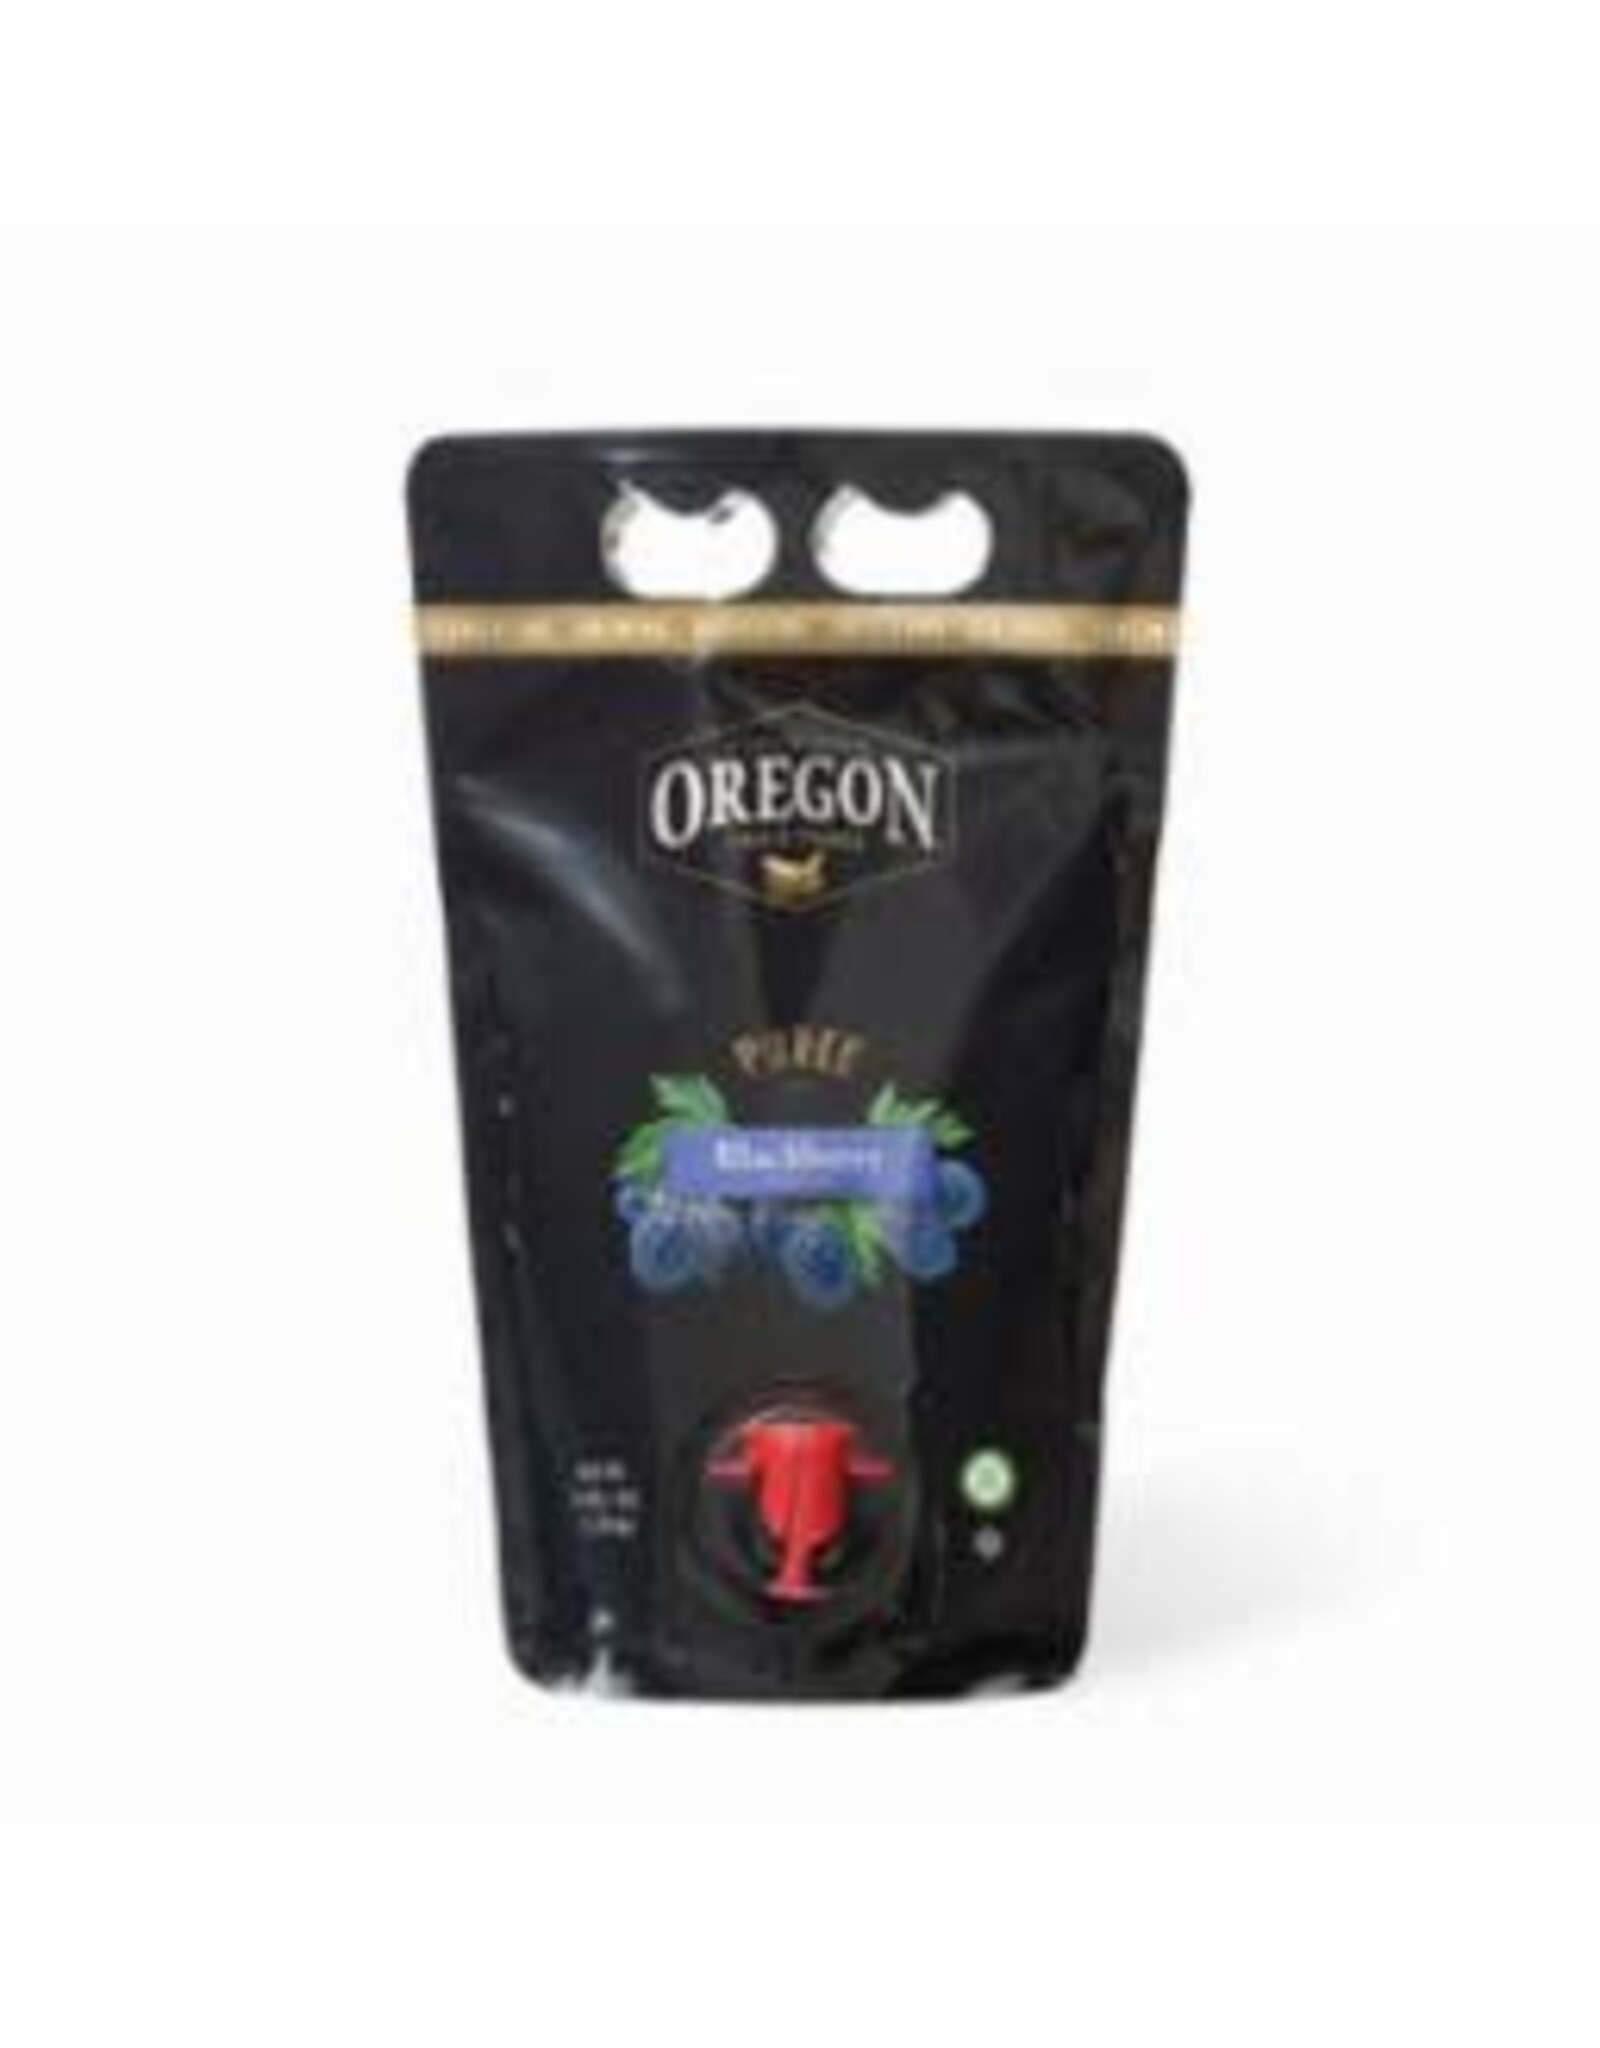 Oregon Oregon Blackberry Puree 49 oz Pouch